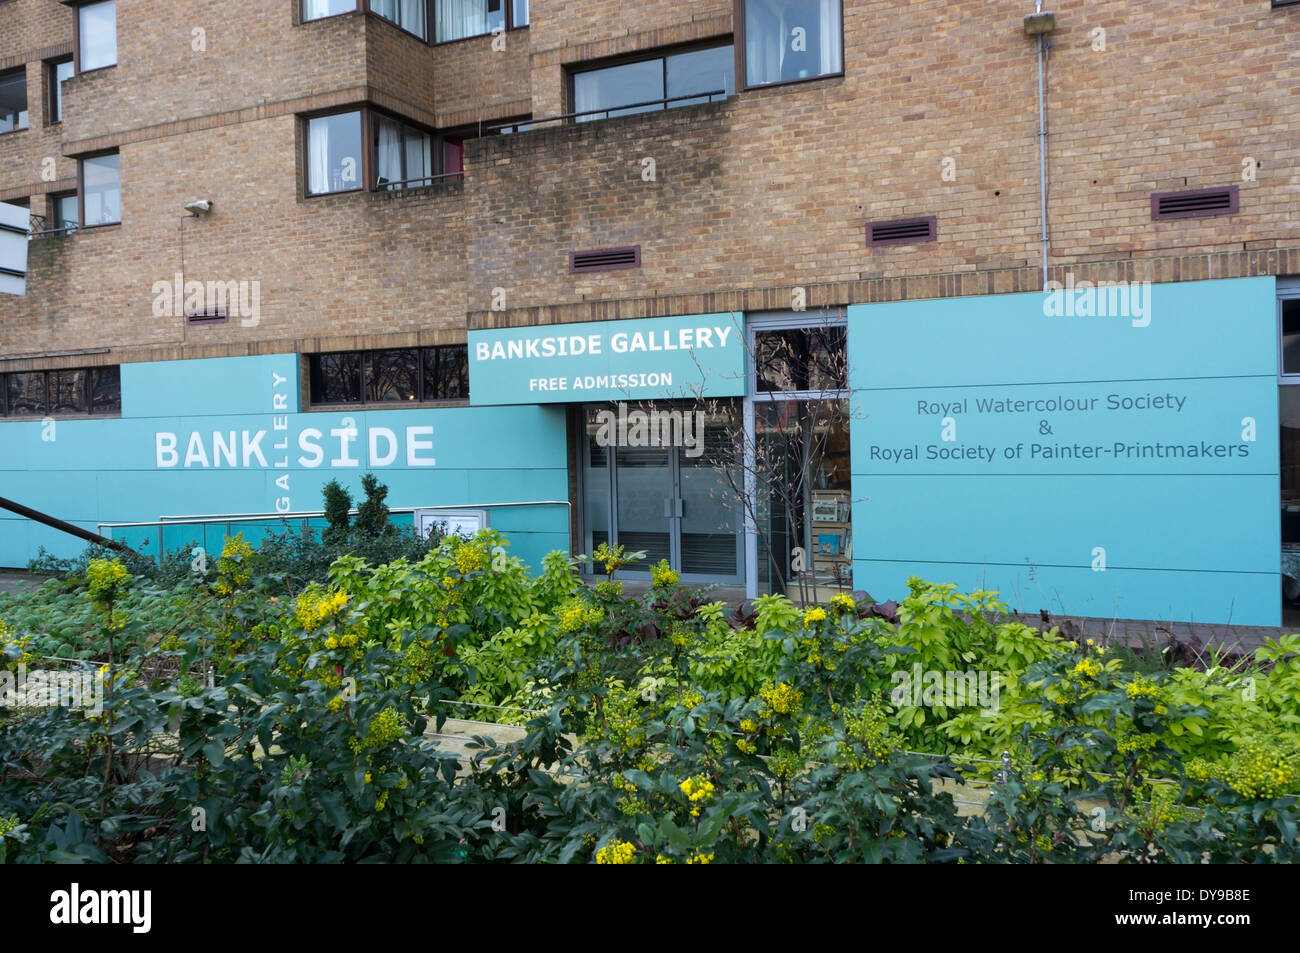 Bankside Gallery in Southwark, London. Stock Photo